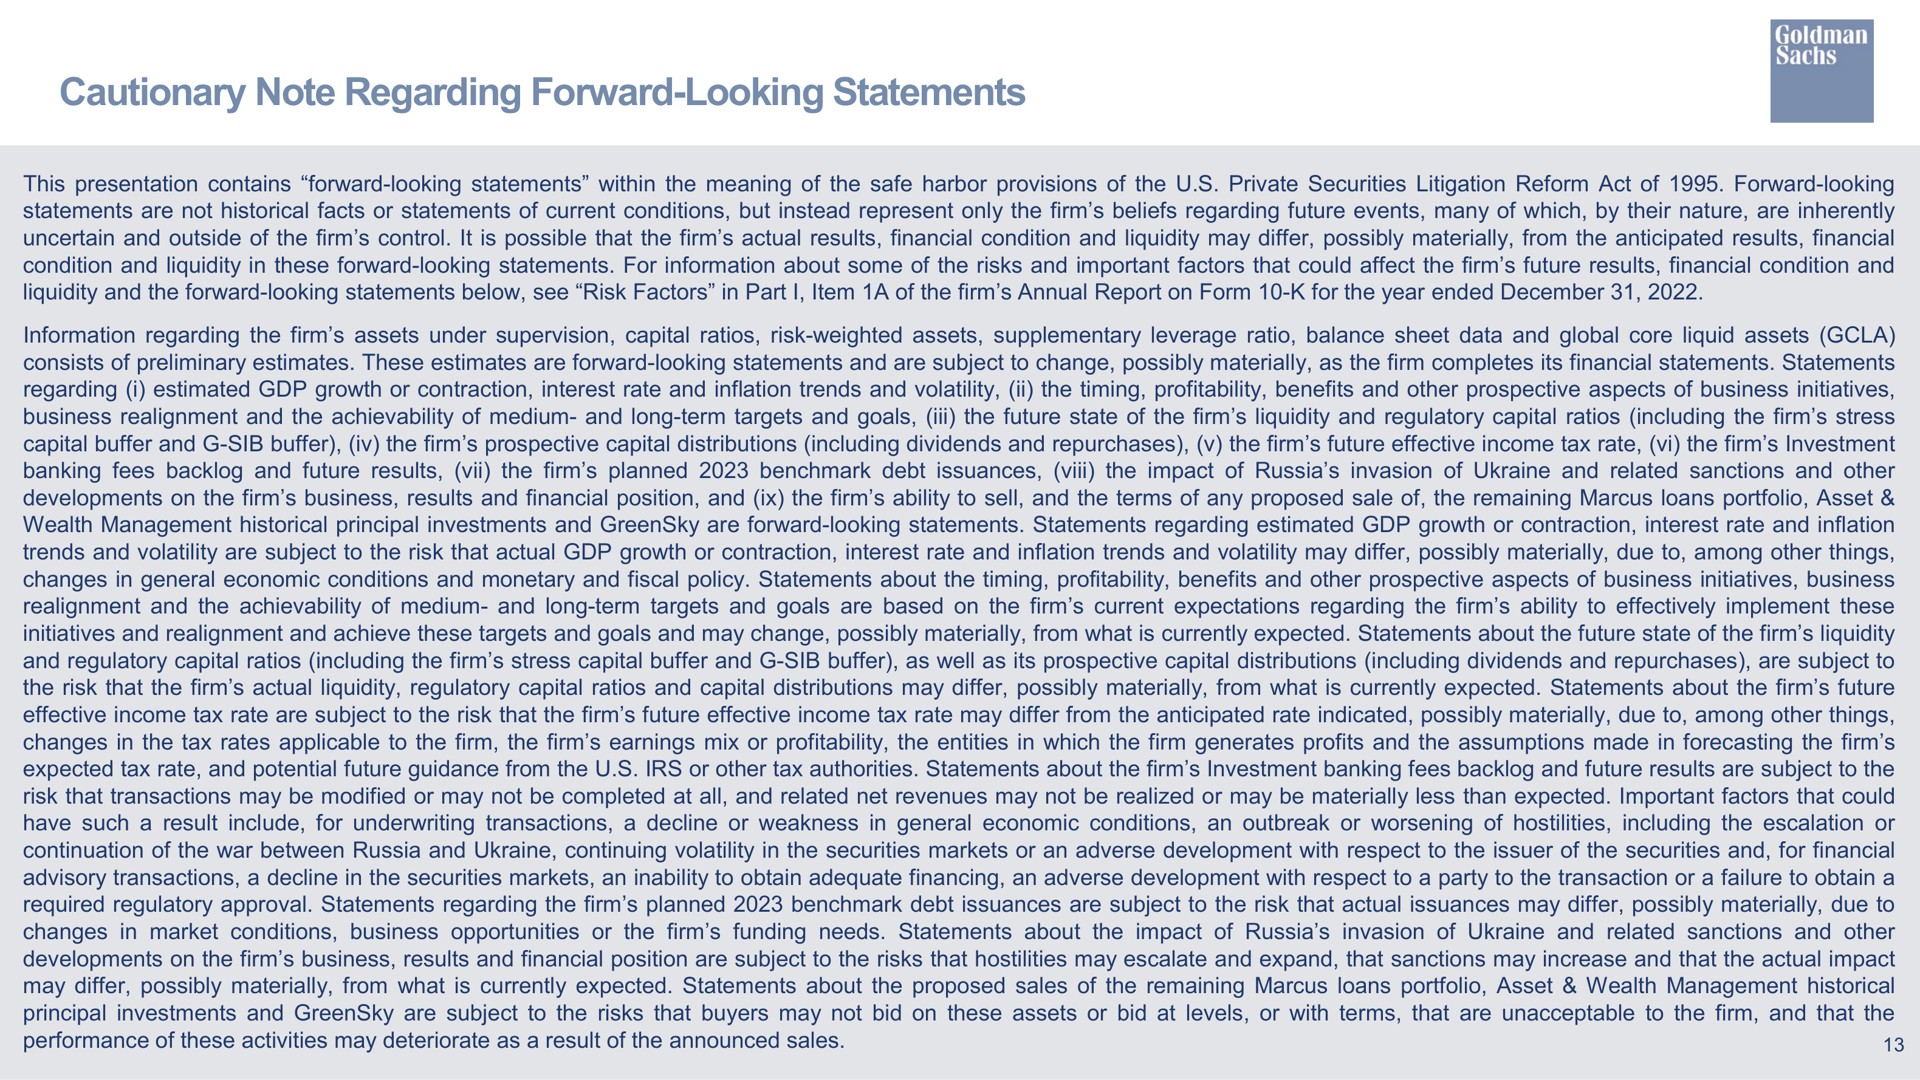 cautionary note regarding forward looking statements | Goldman Sachs